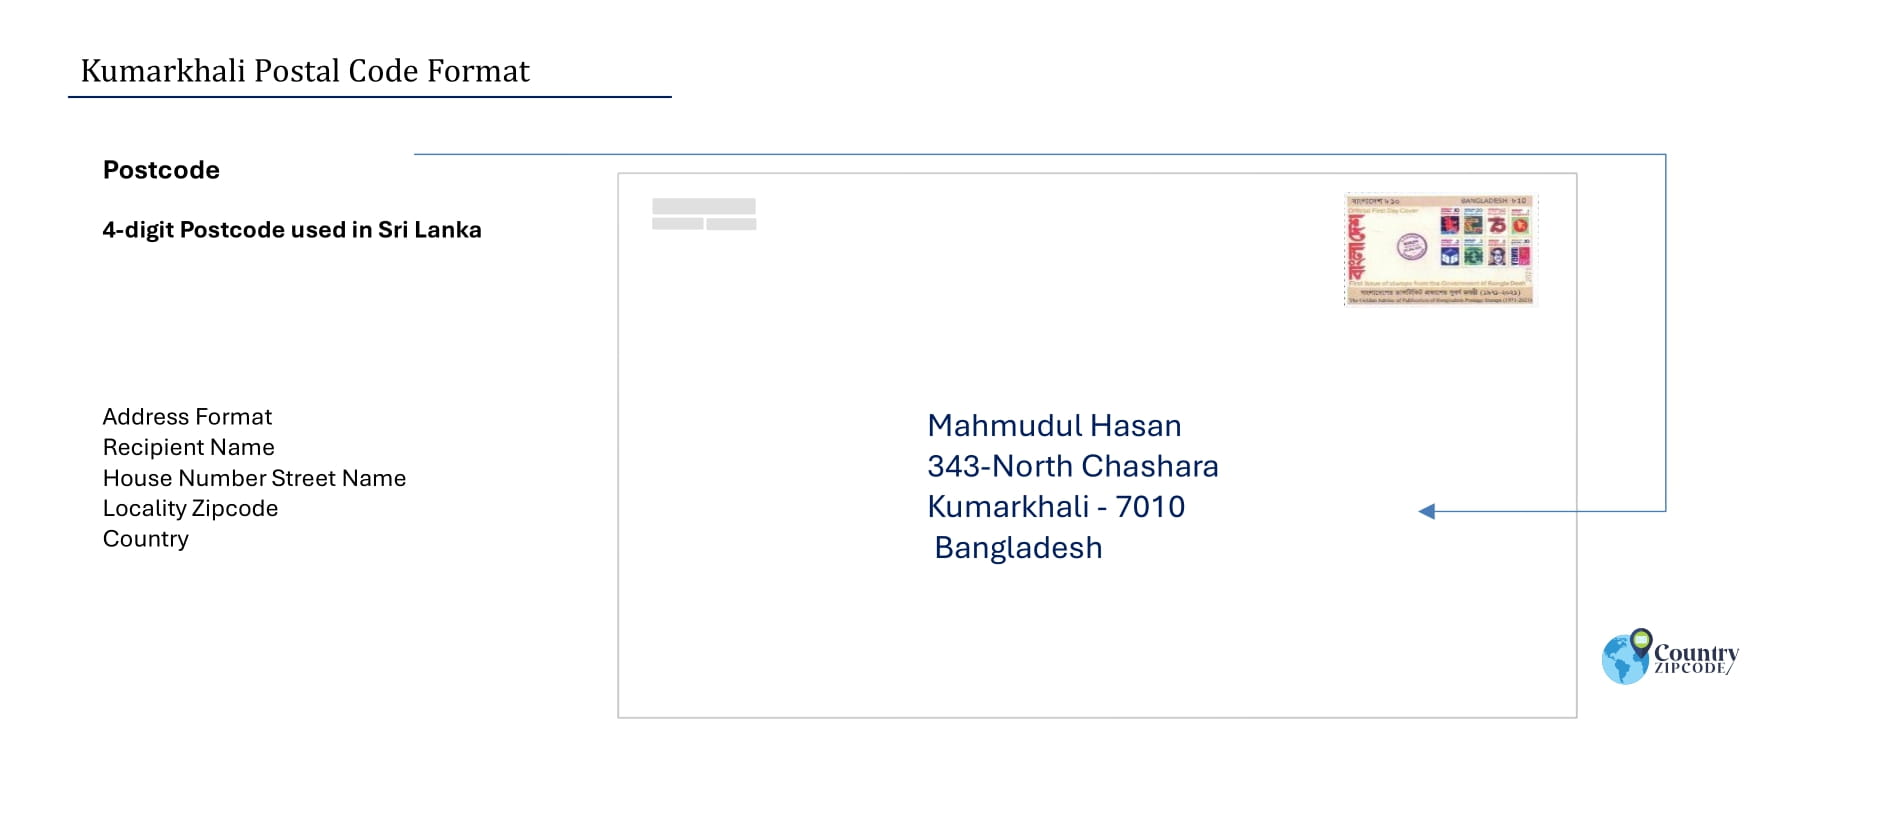 Kumarkhali Postal code format